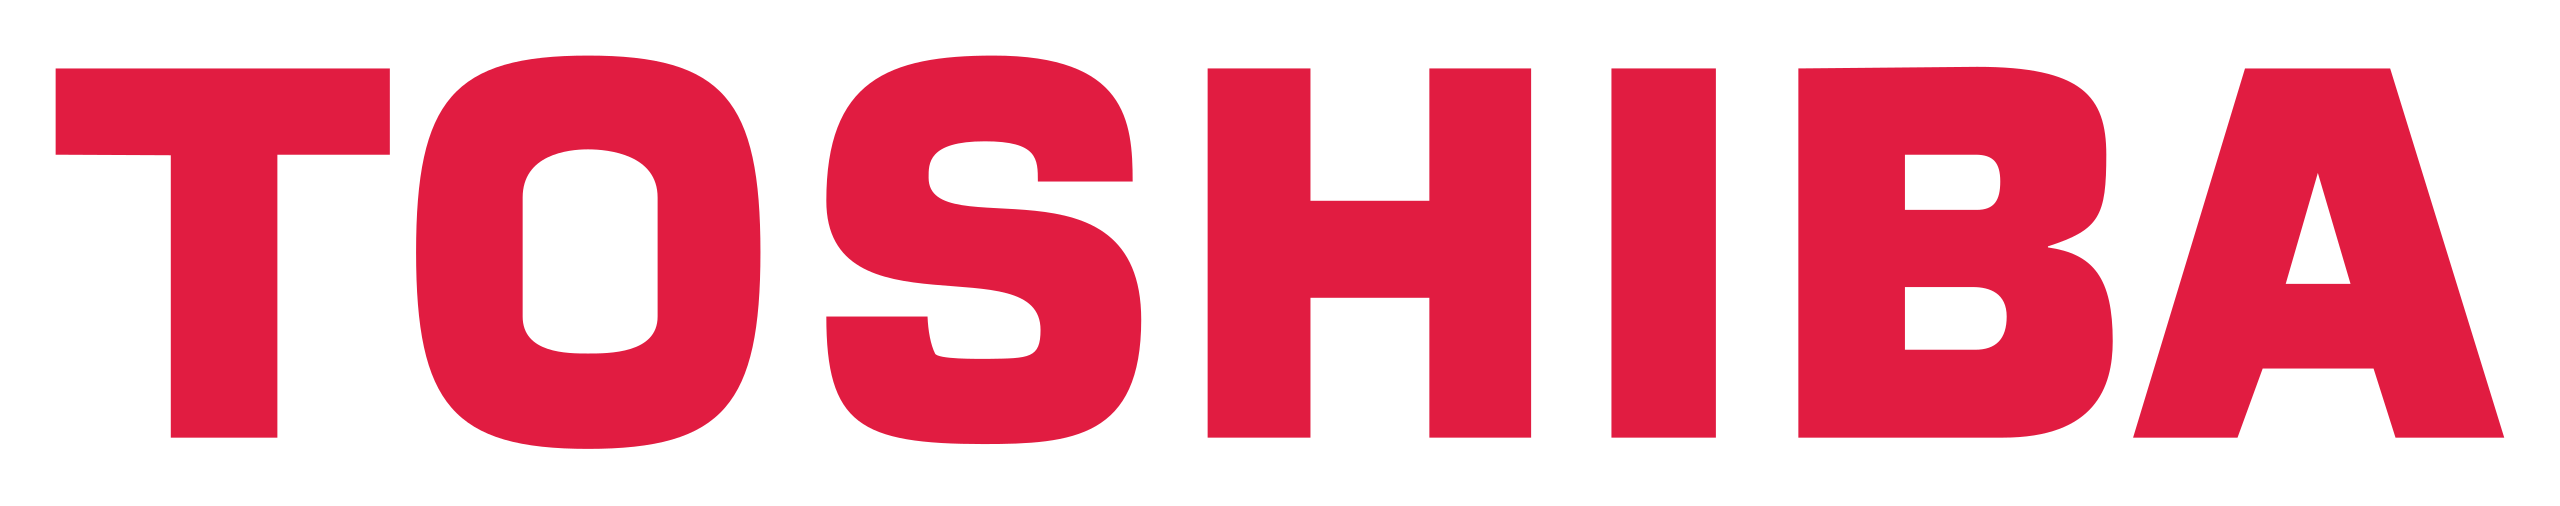 Toshiba Banner Logo